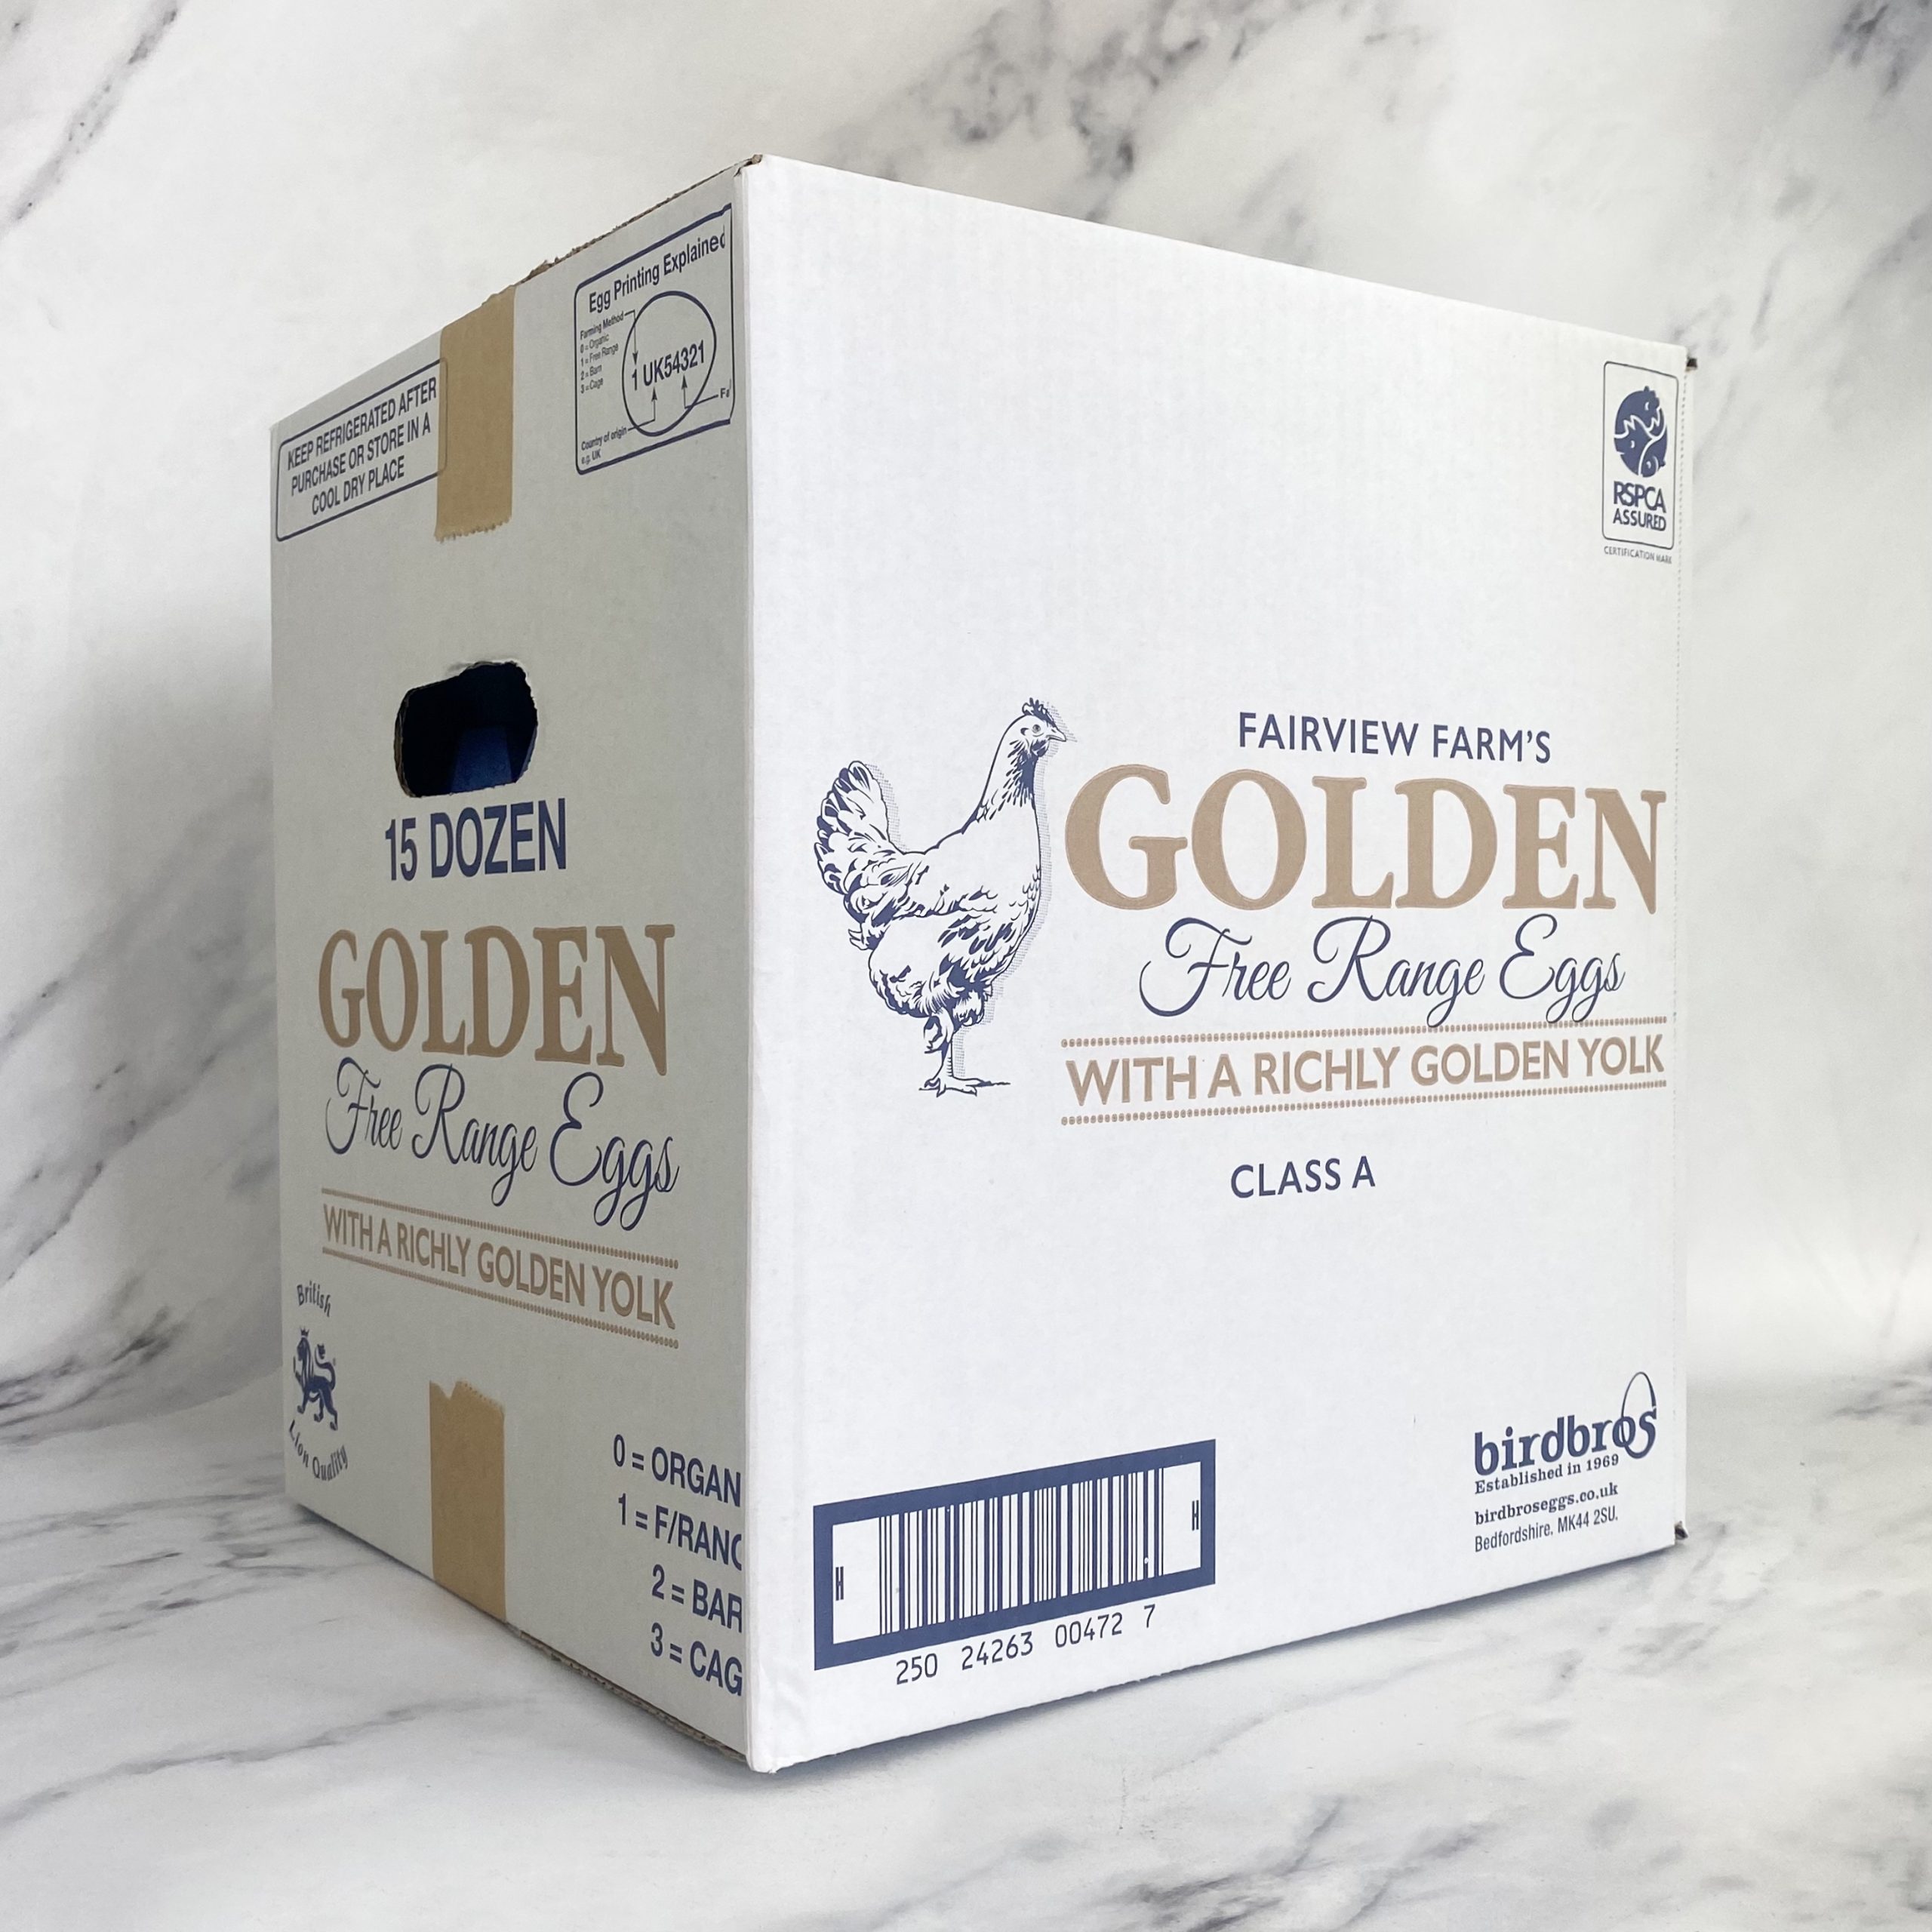 Bird Bros Free Range Medium Golden Eggs – Box 180